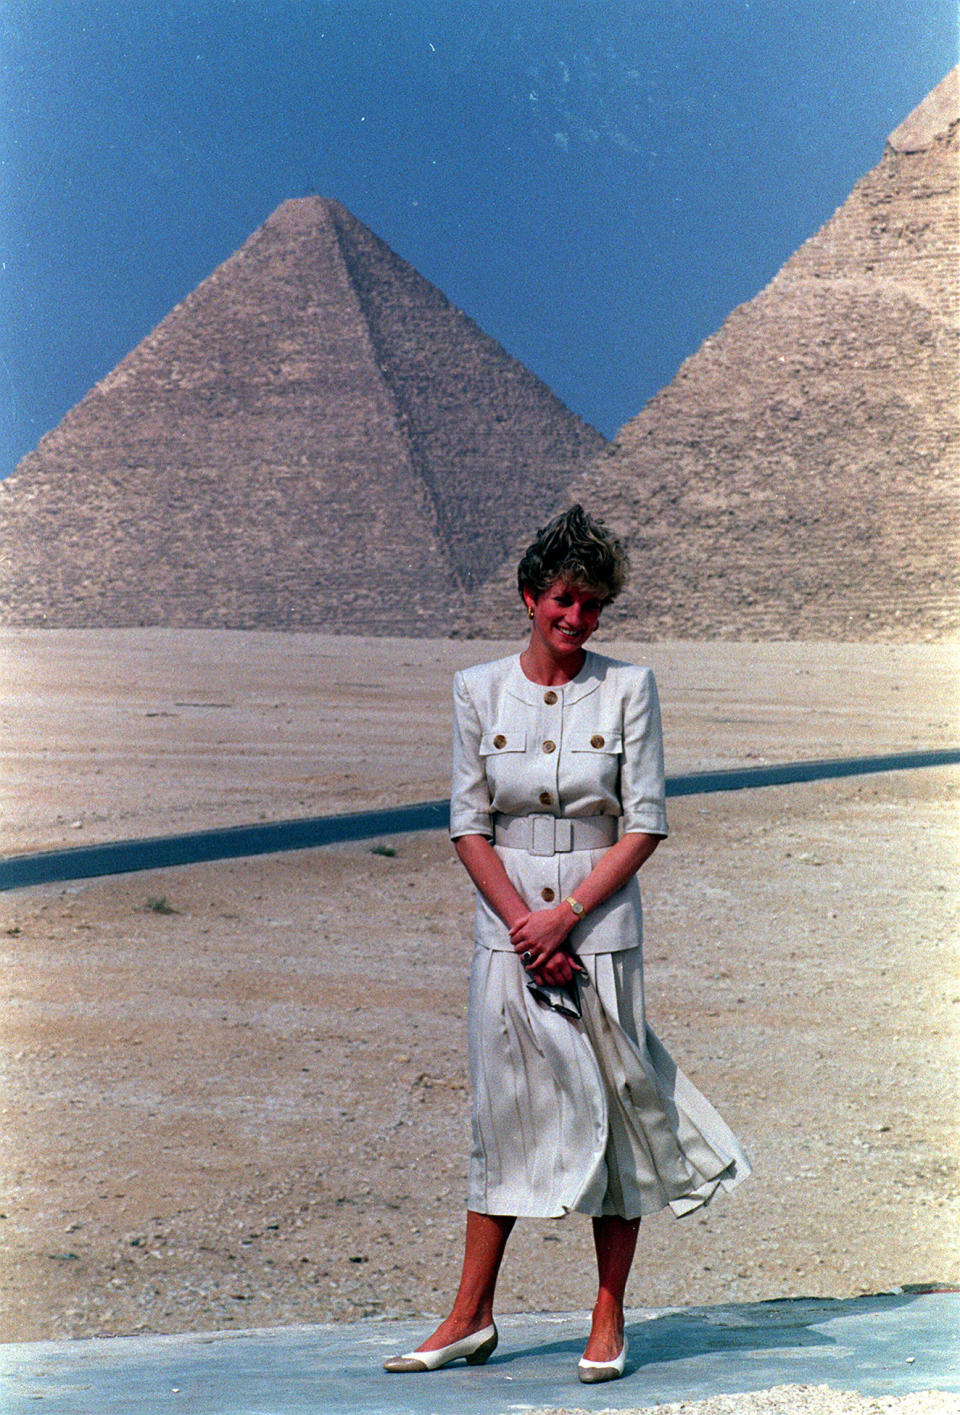 Visiting Giza, Egypt, in May 1992.